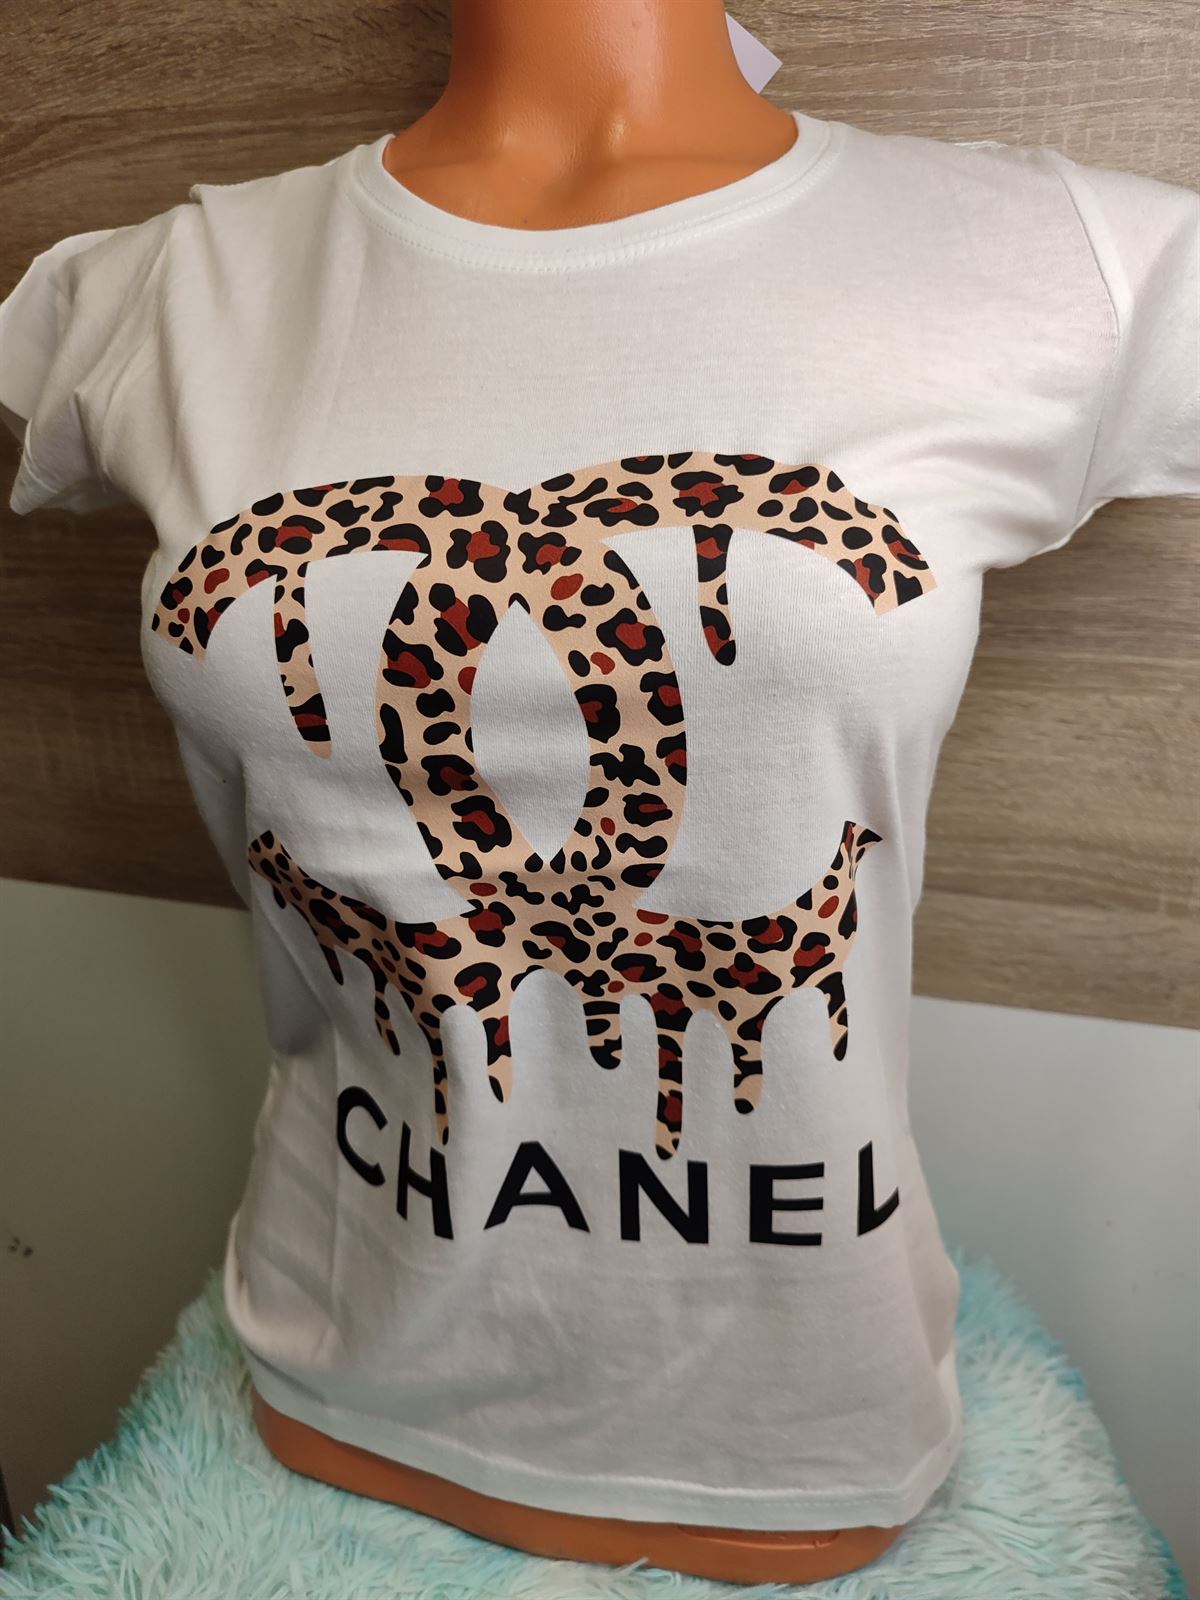 Camiseta Channel mujer - Imagen 1